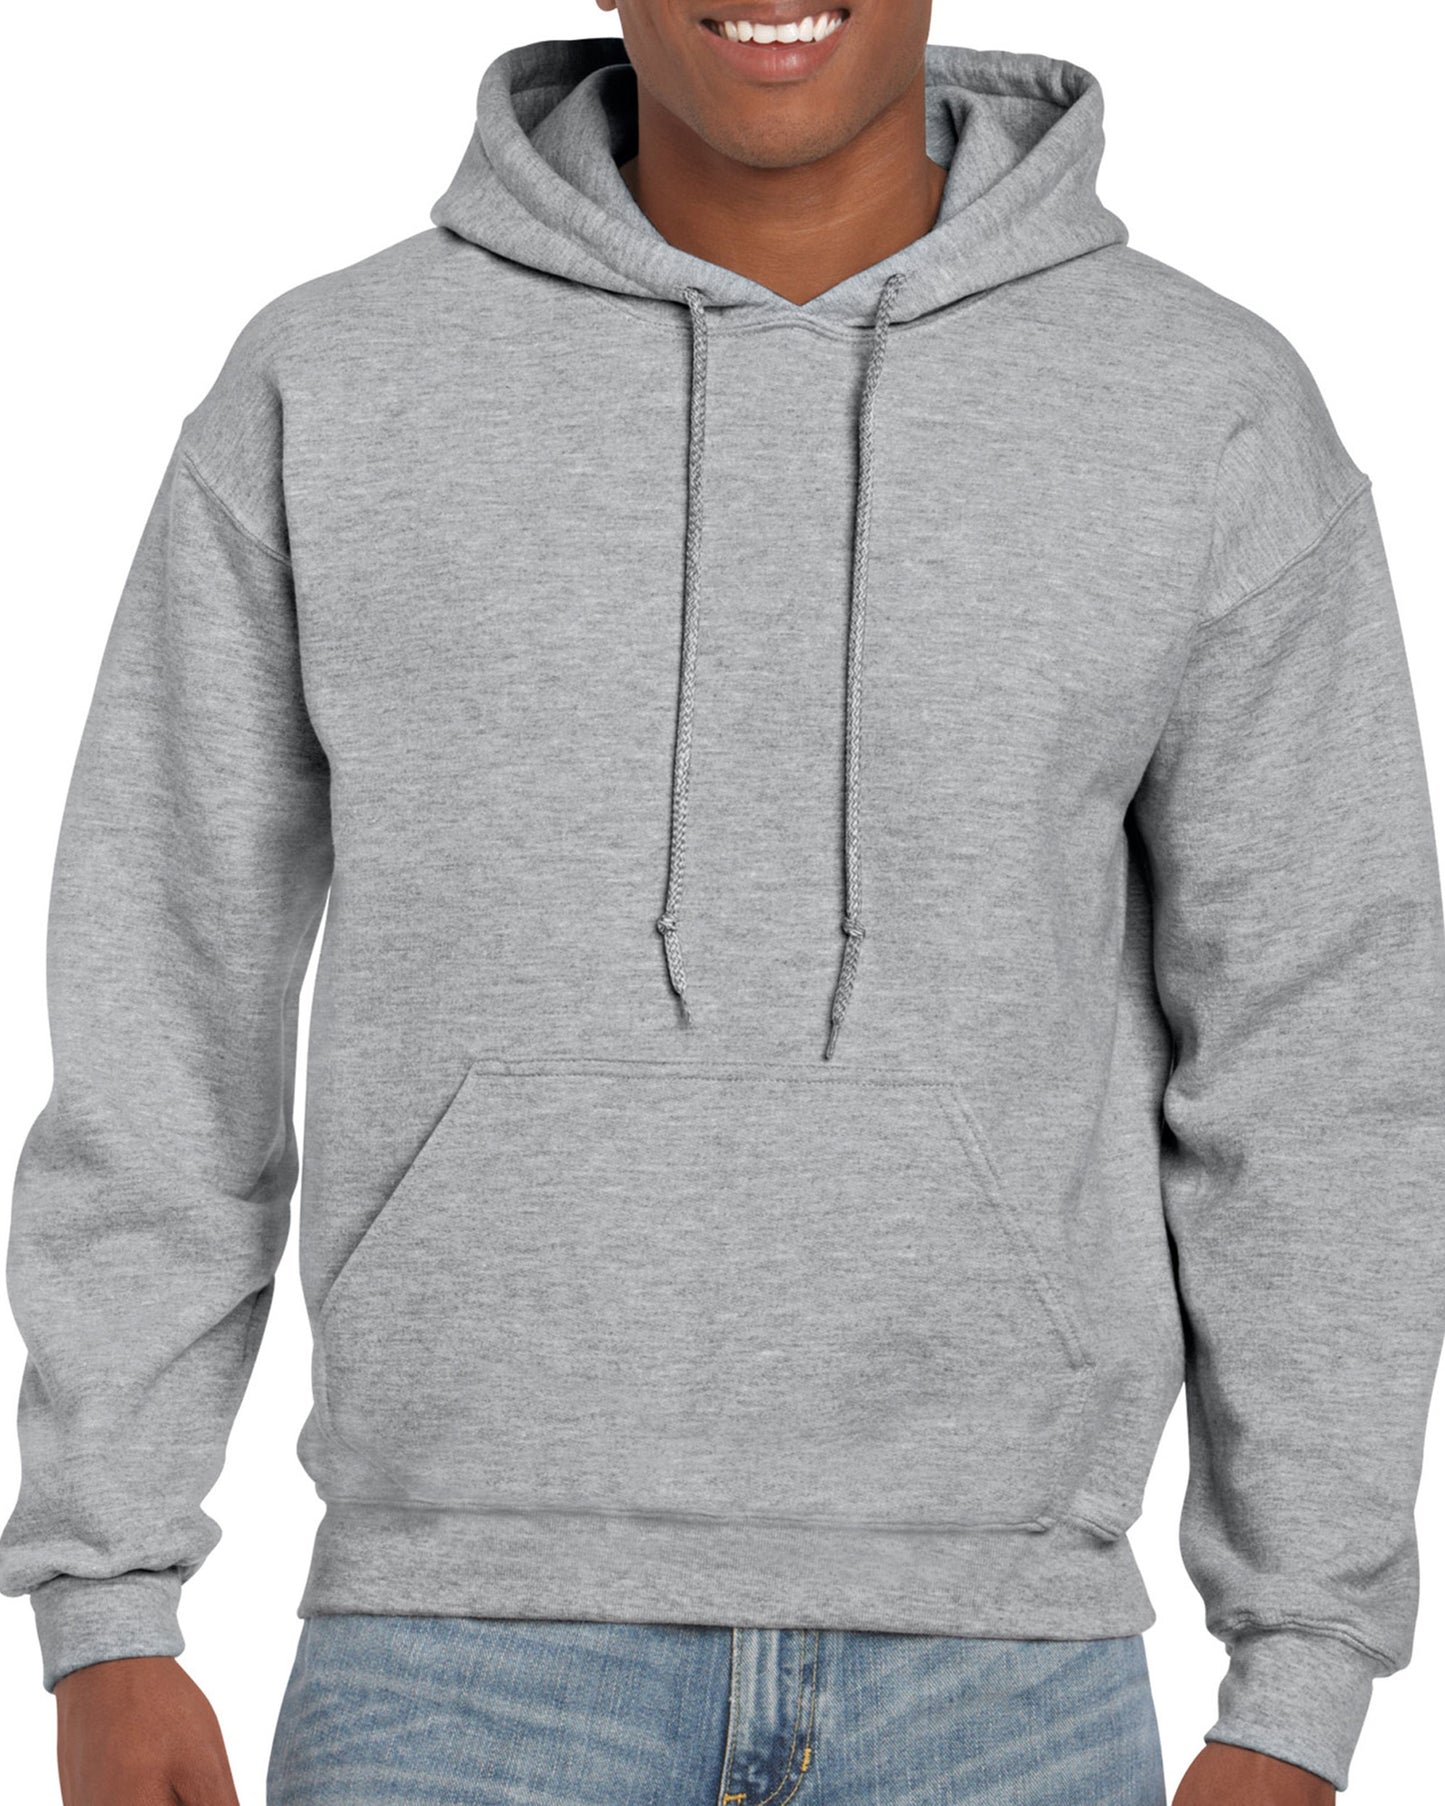 Adult Dryblend Hooded Sweatshirt